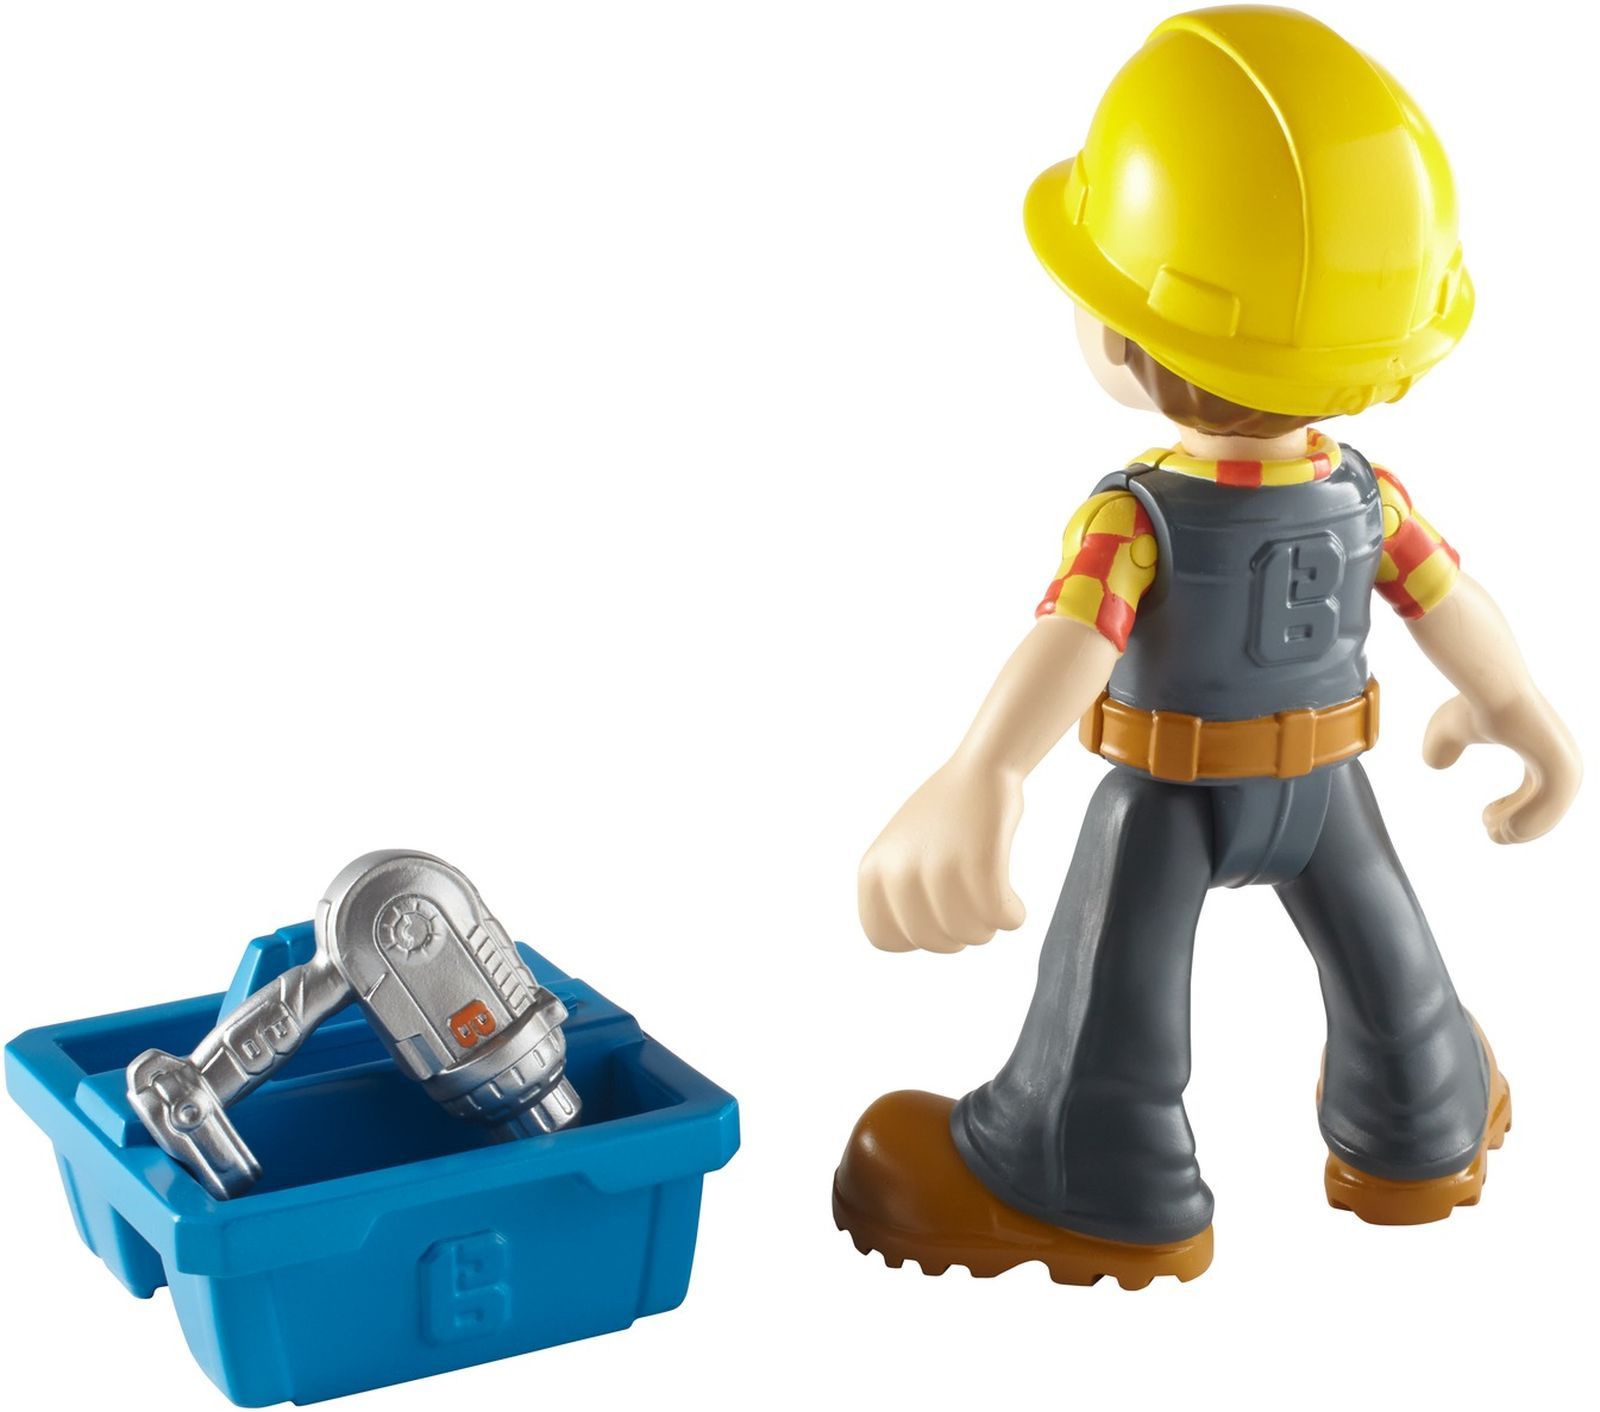 Bob the Builder   Repair & Build Bob